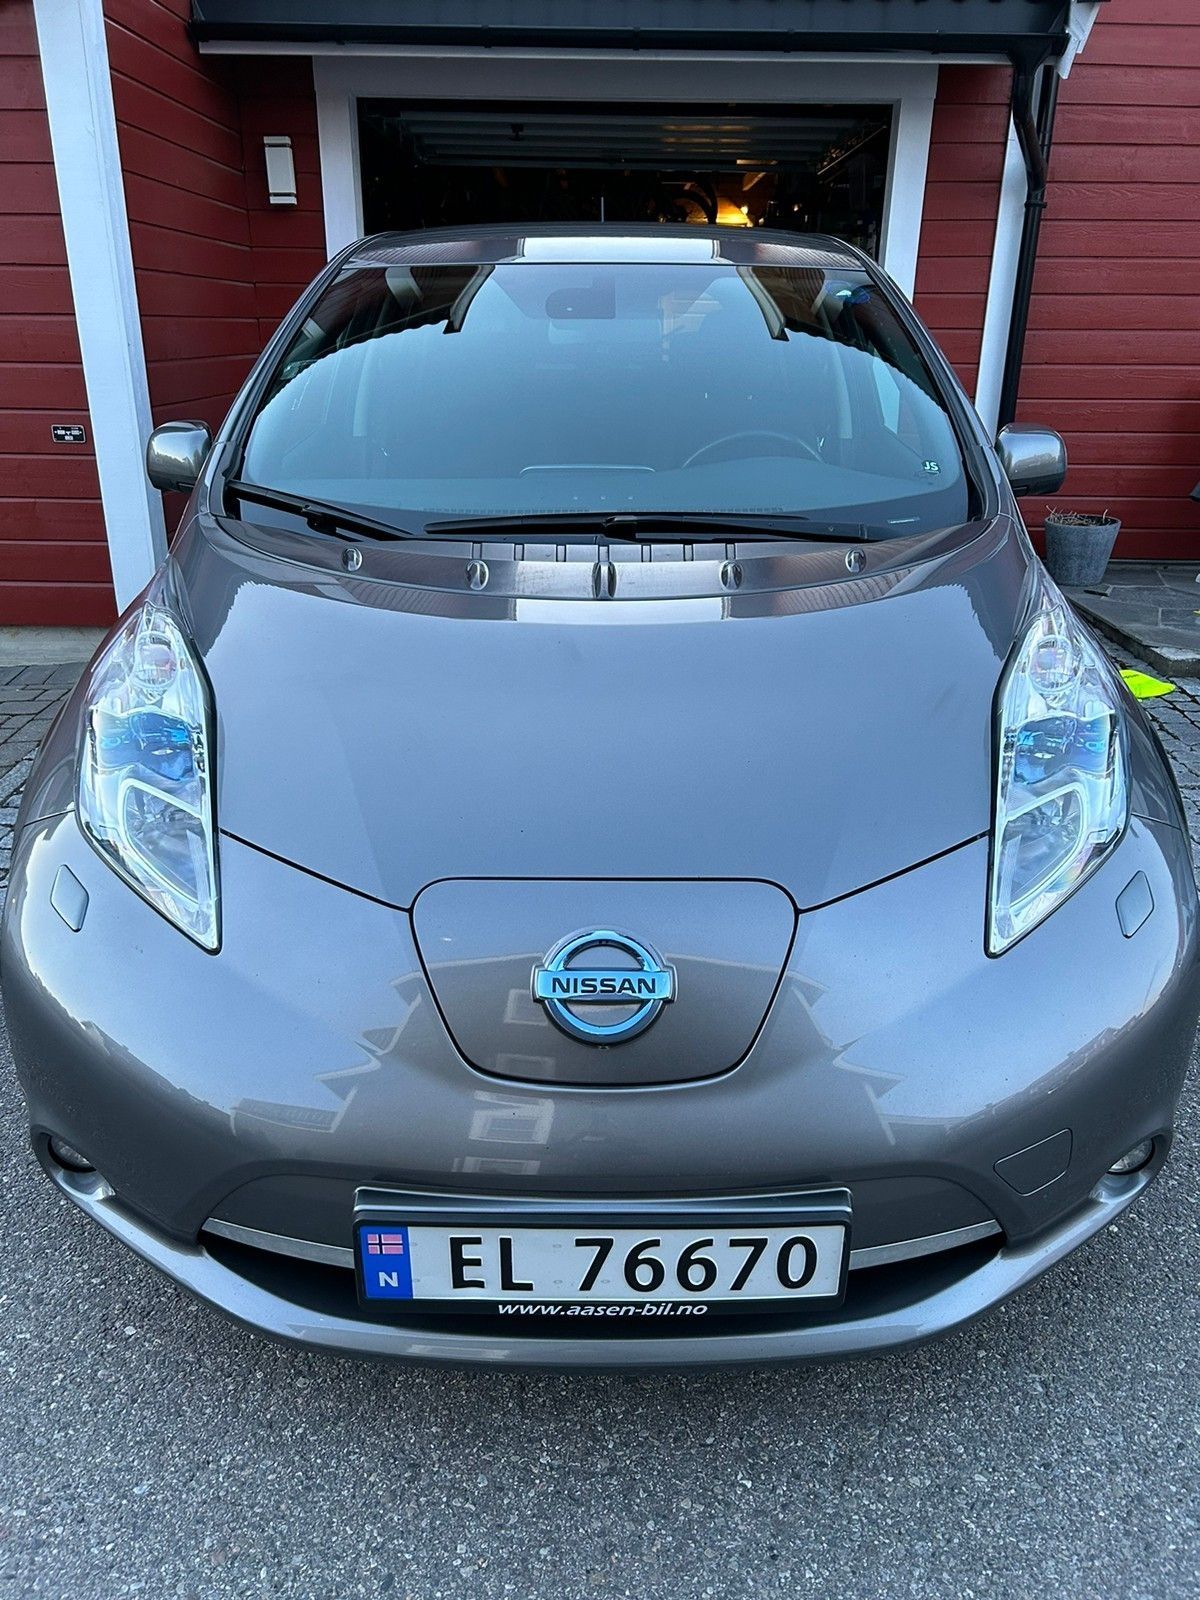 Nissan Leaf Nordic 2015р. 11/12 поділок 24kwh